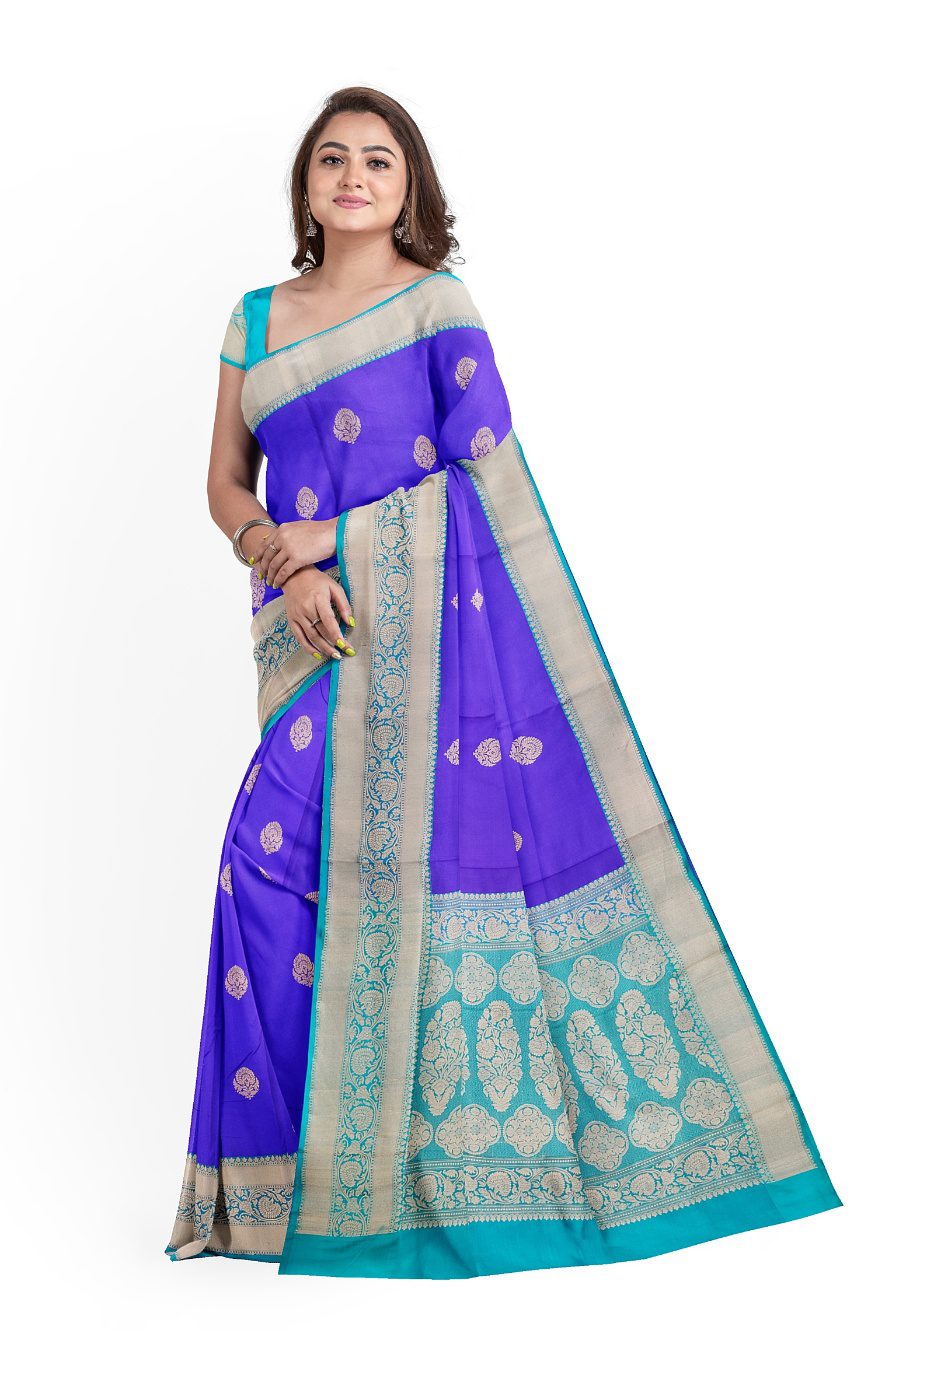 Banarsi Saree Lapis (Shade of Blue with purple hint) & Turquoise